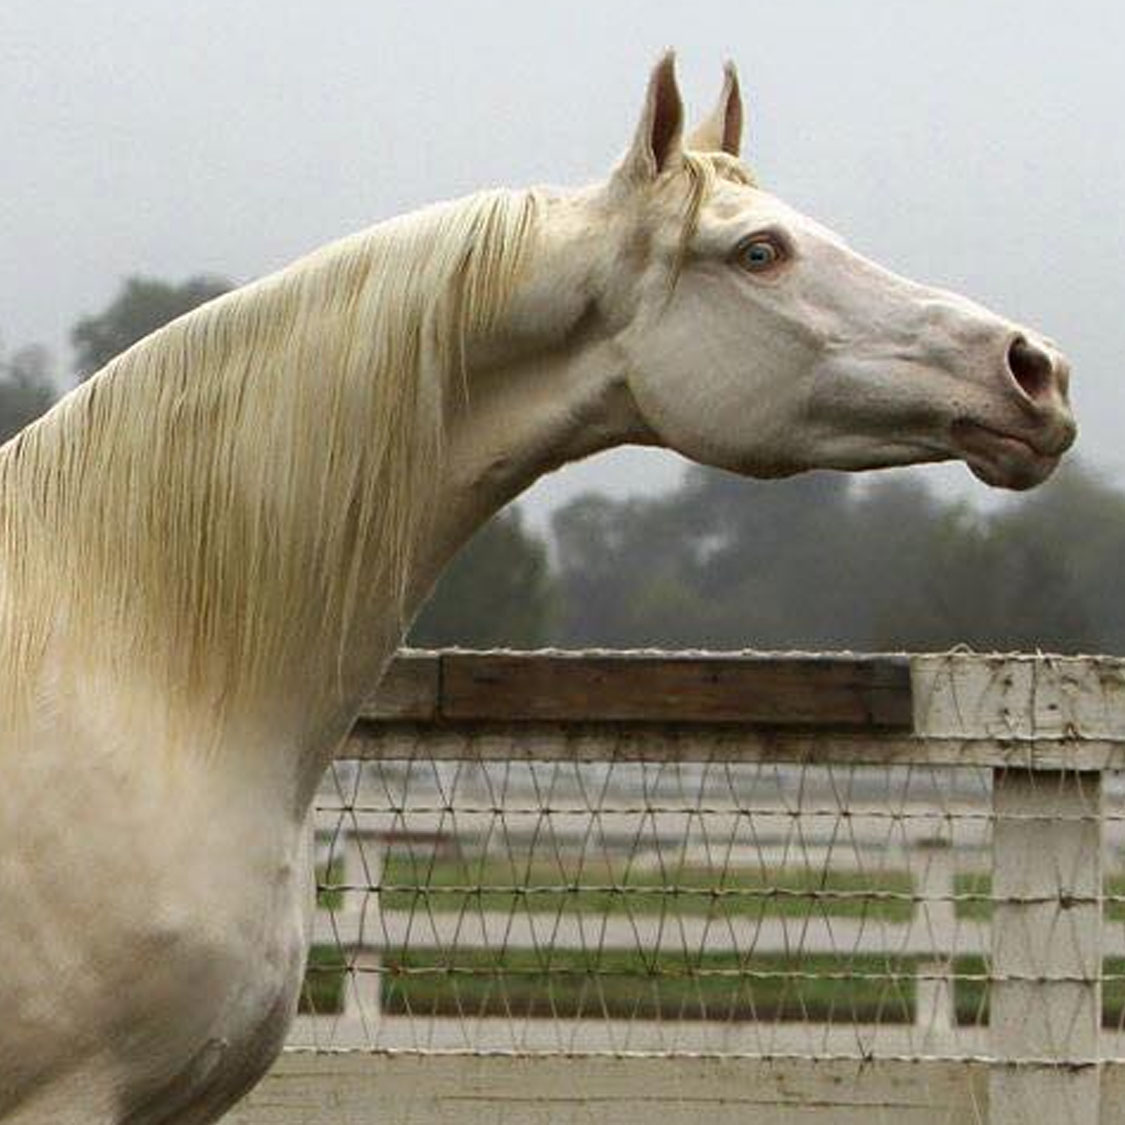 Cremello Saddlebred Horses